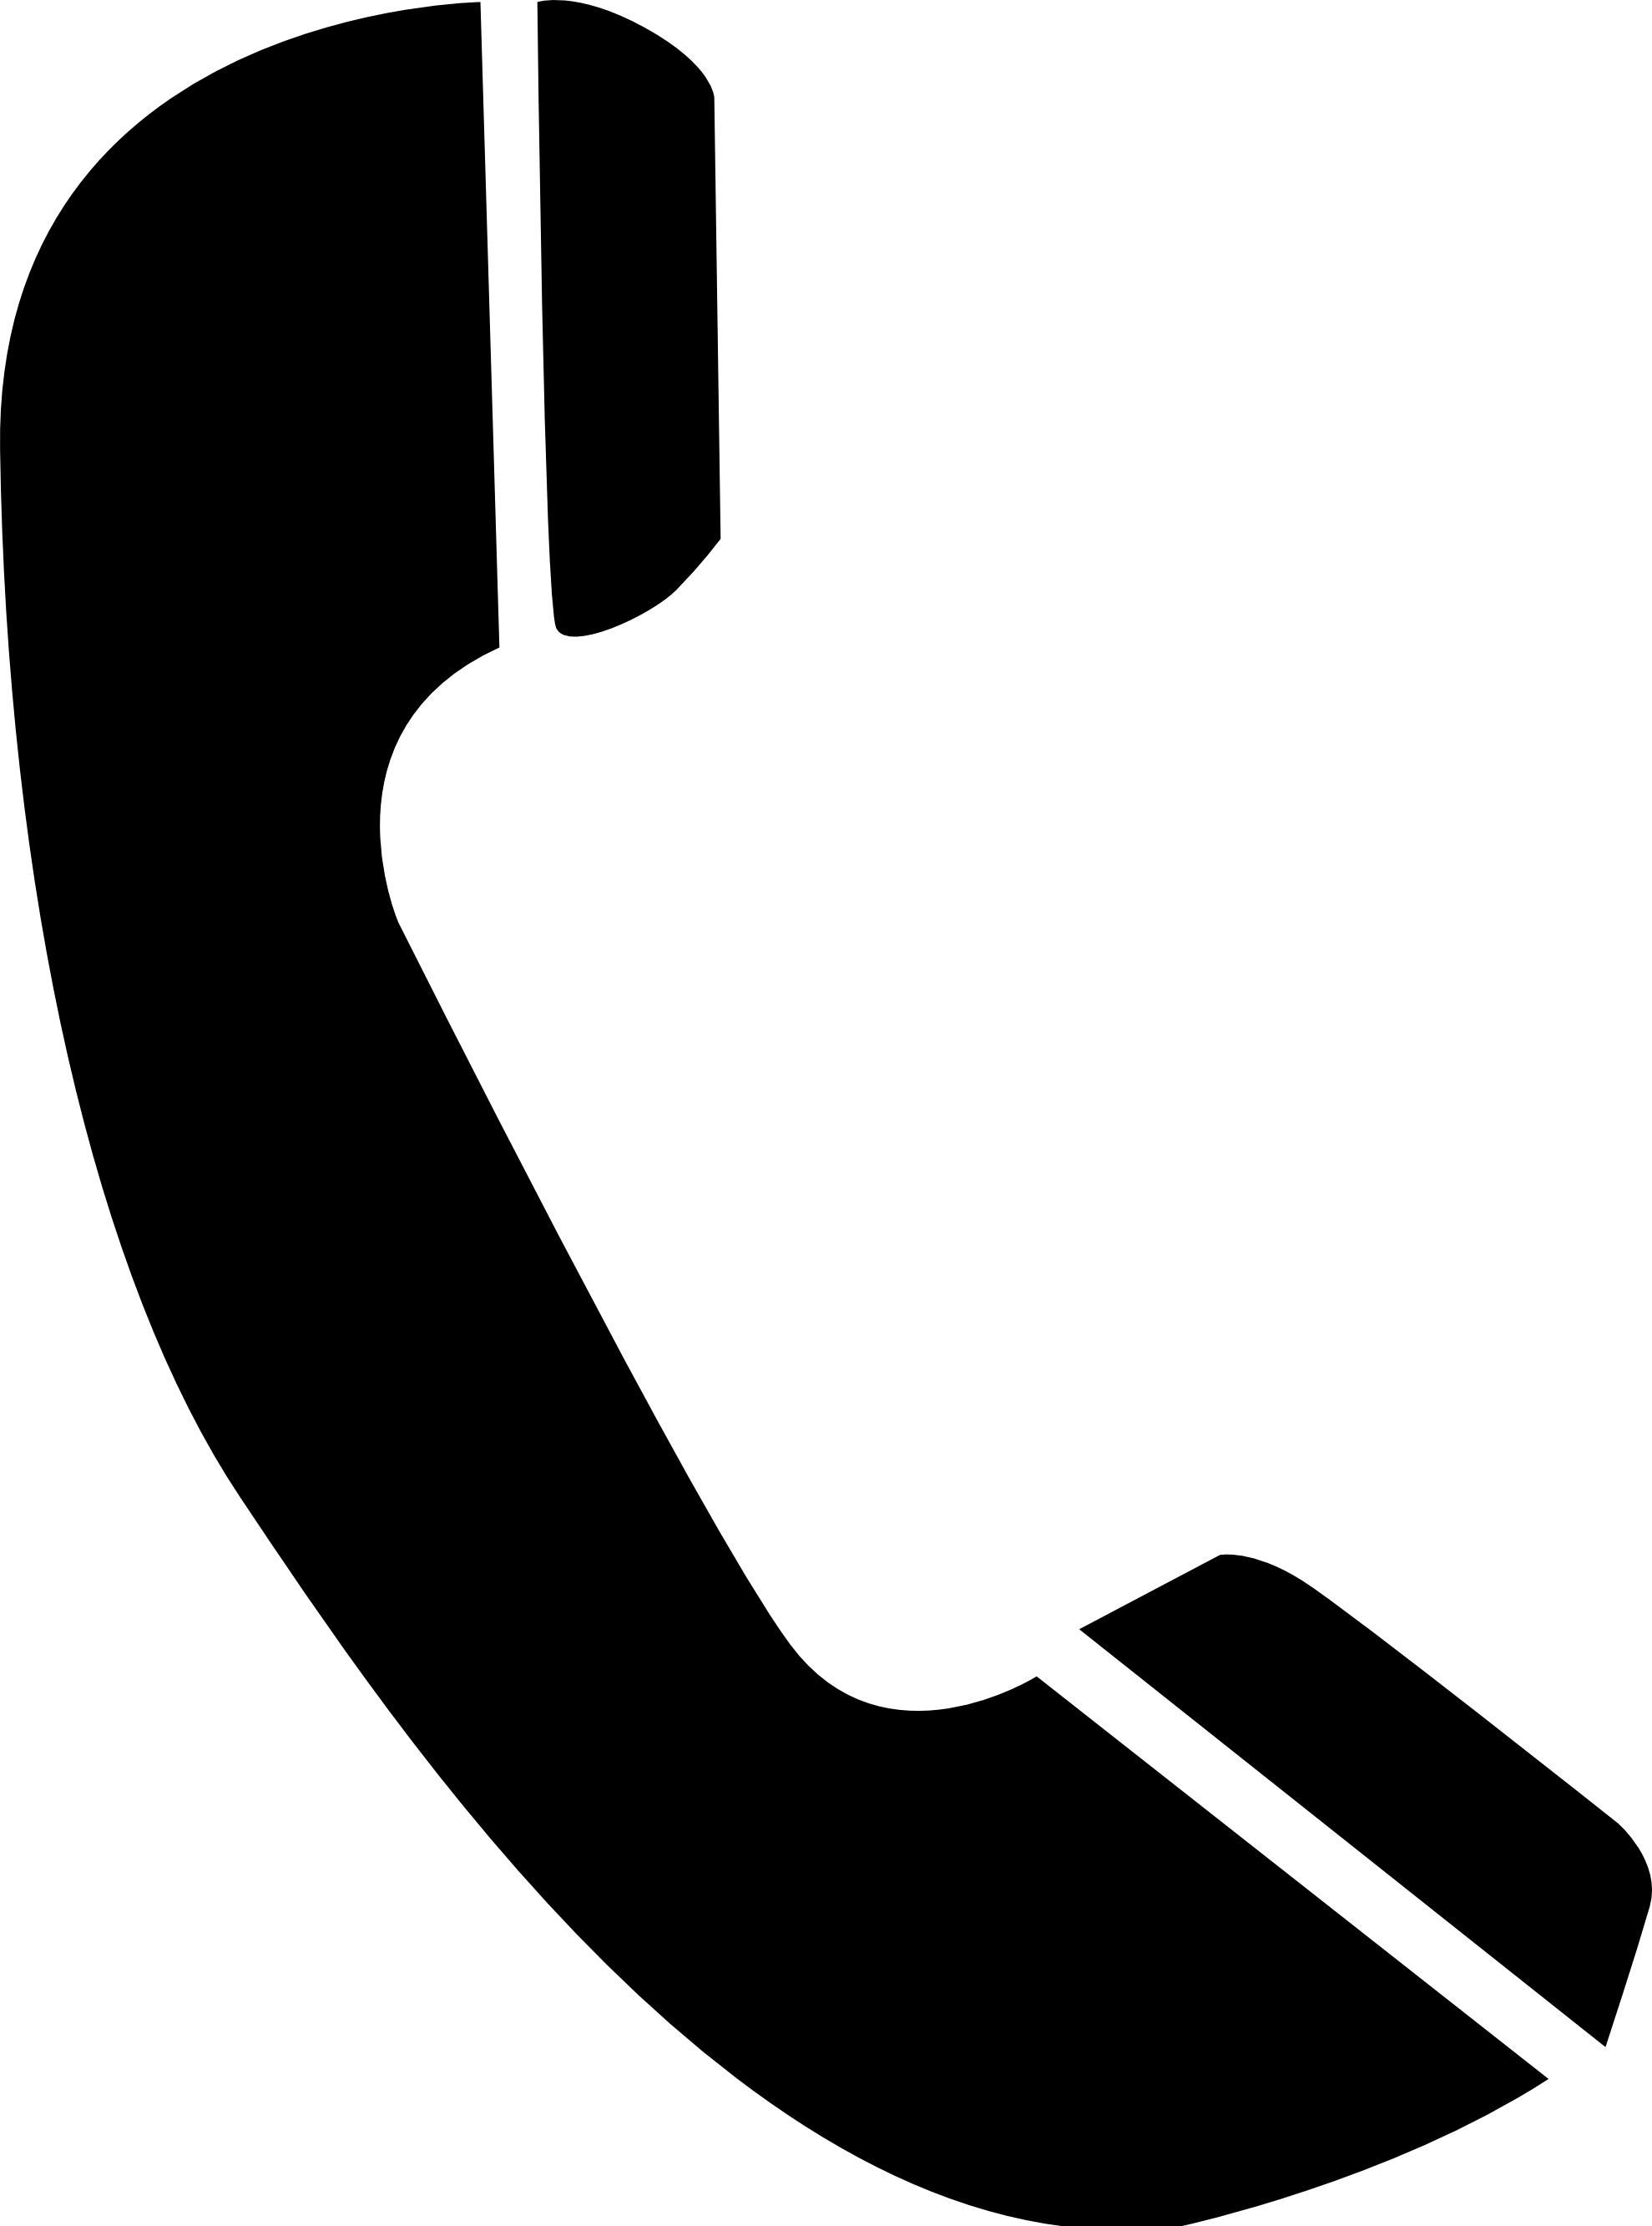 Phone logo clipart